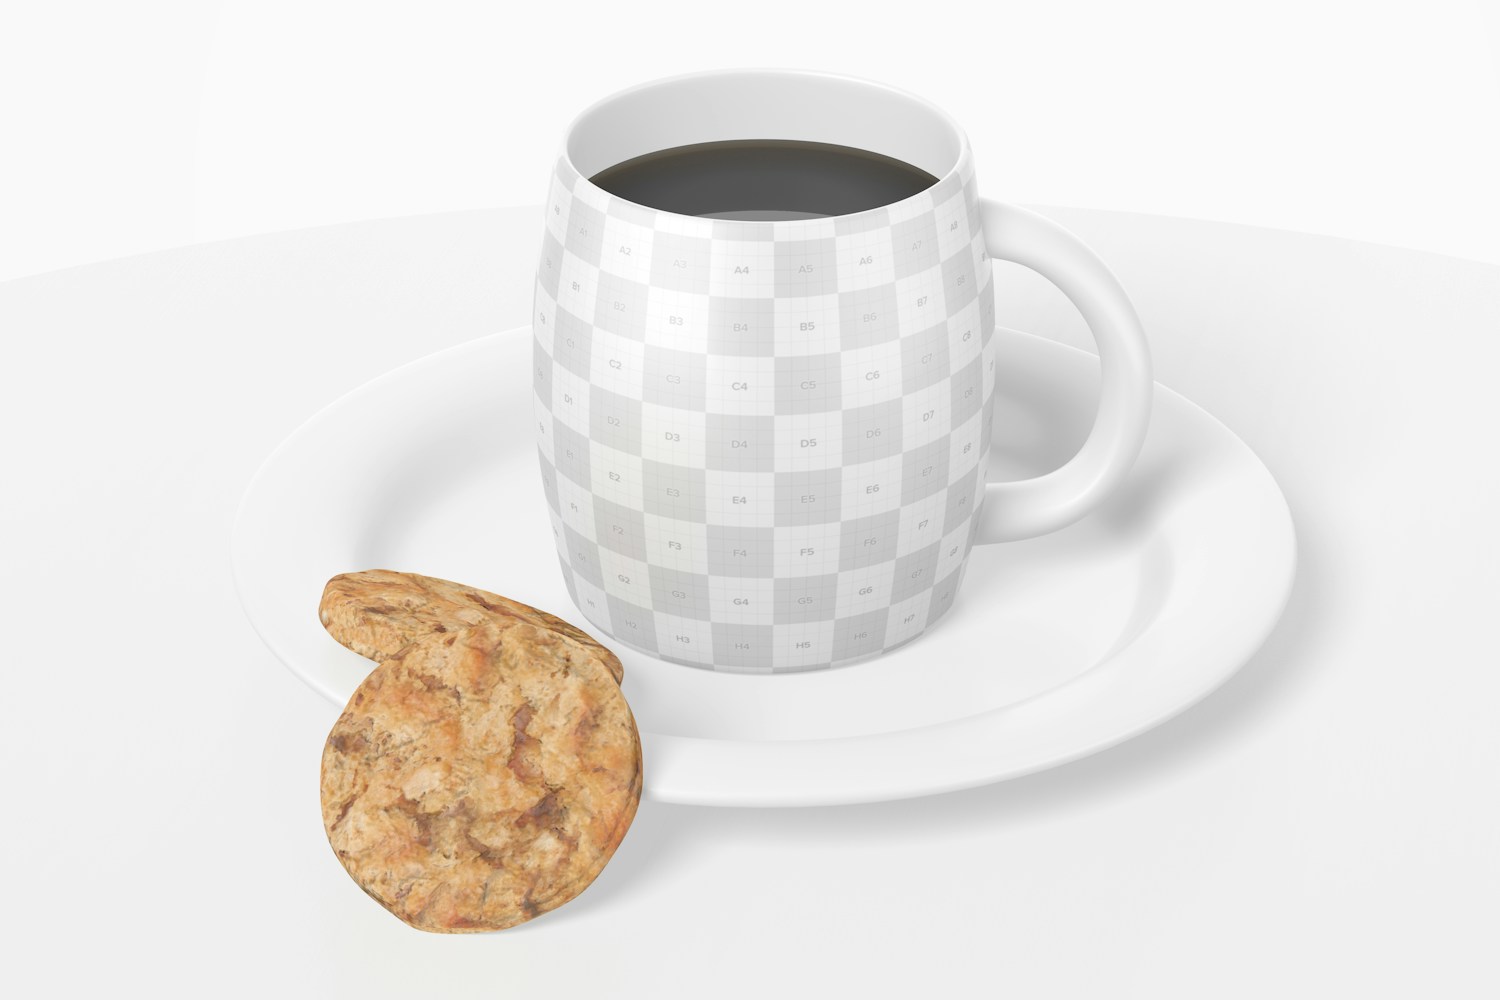 14 oz Ceramic Coffee Mug with Cookies Mockup